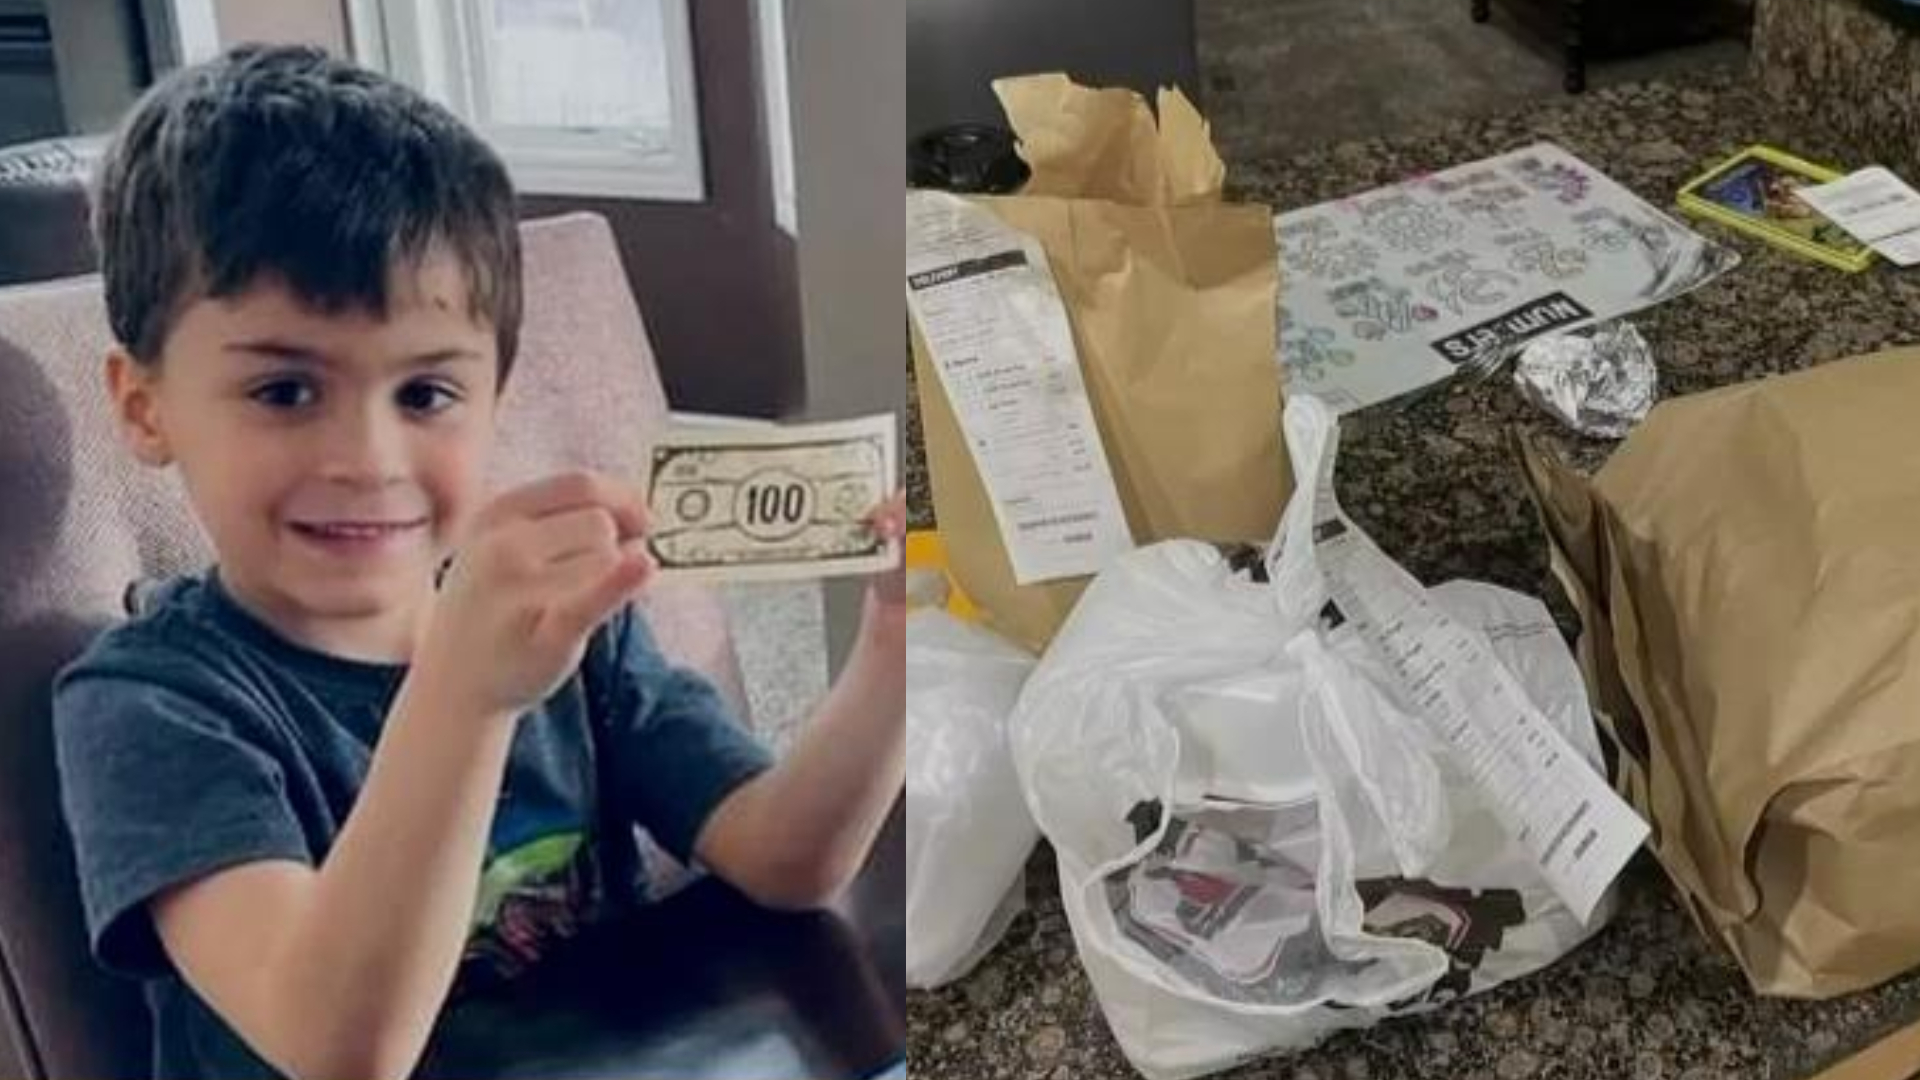 6 year old kid orders $1000 worth of food on his dad's phone